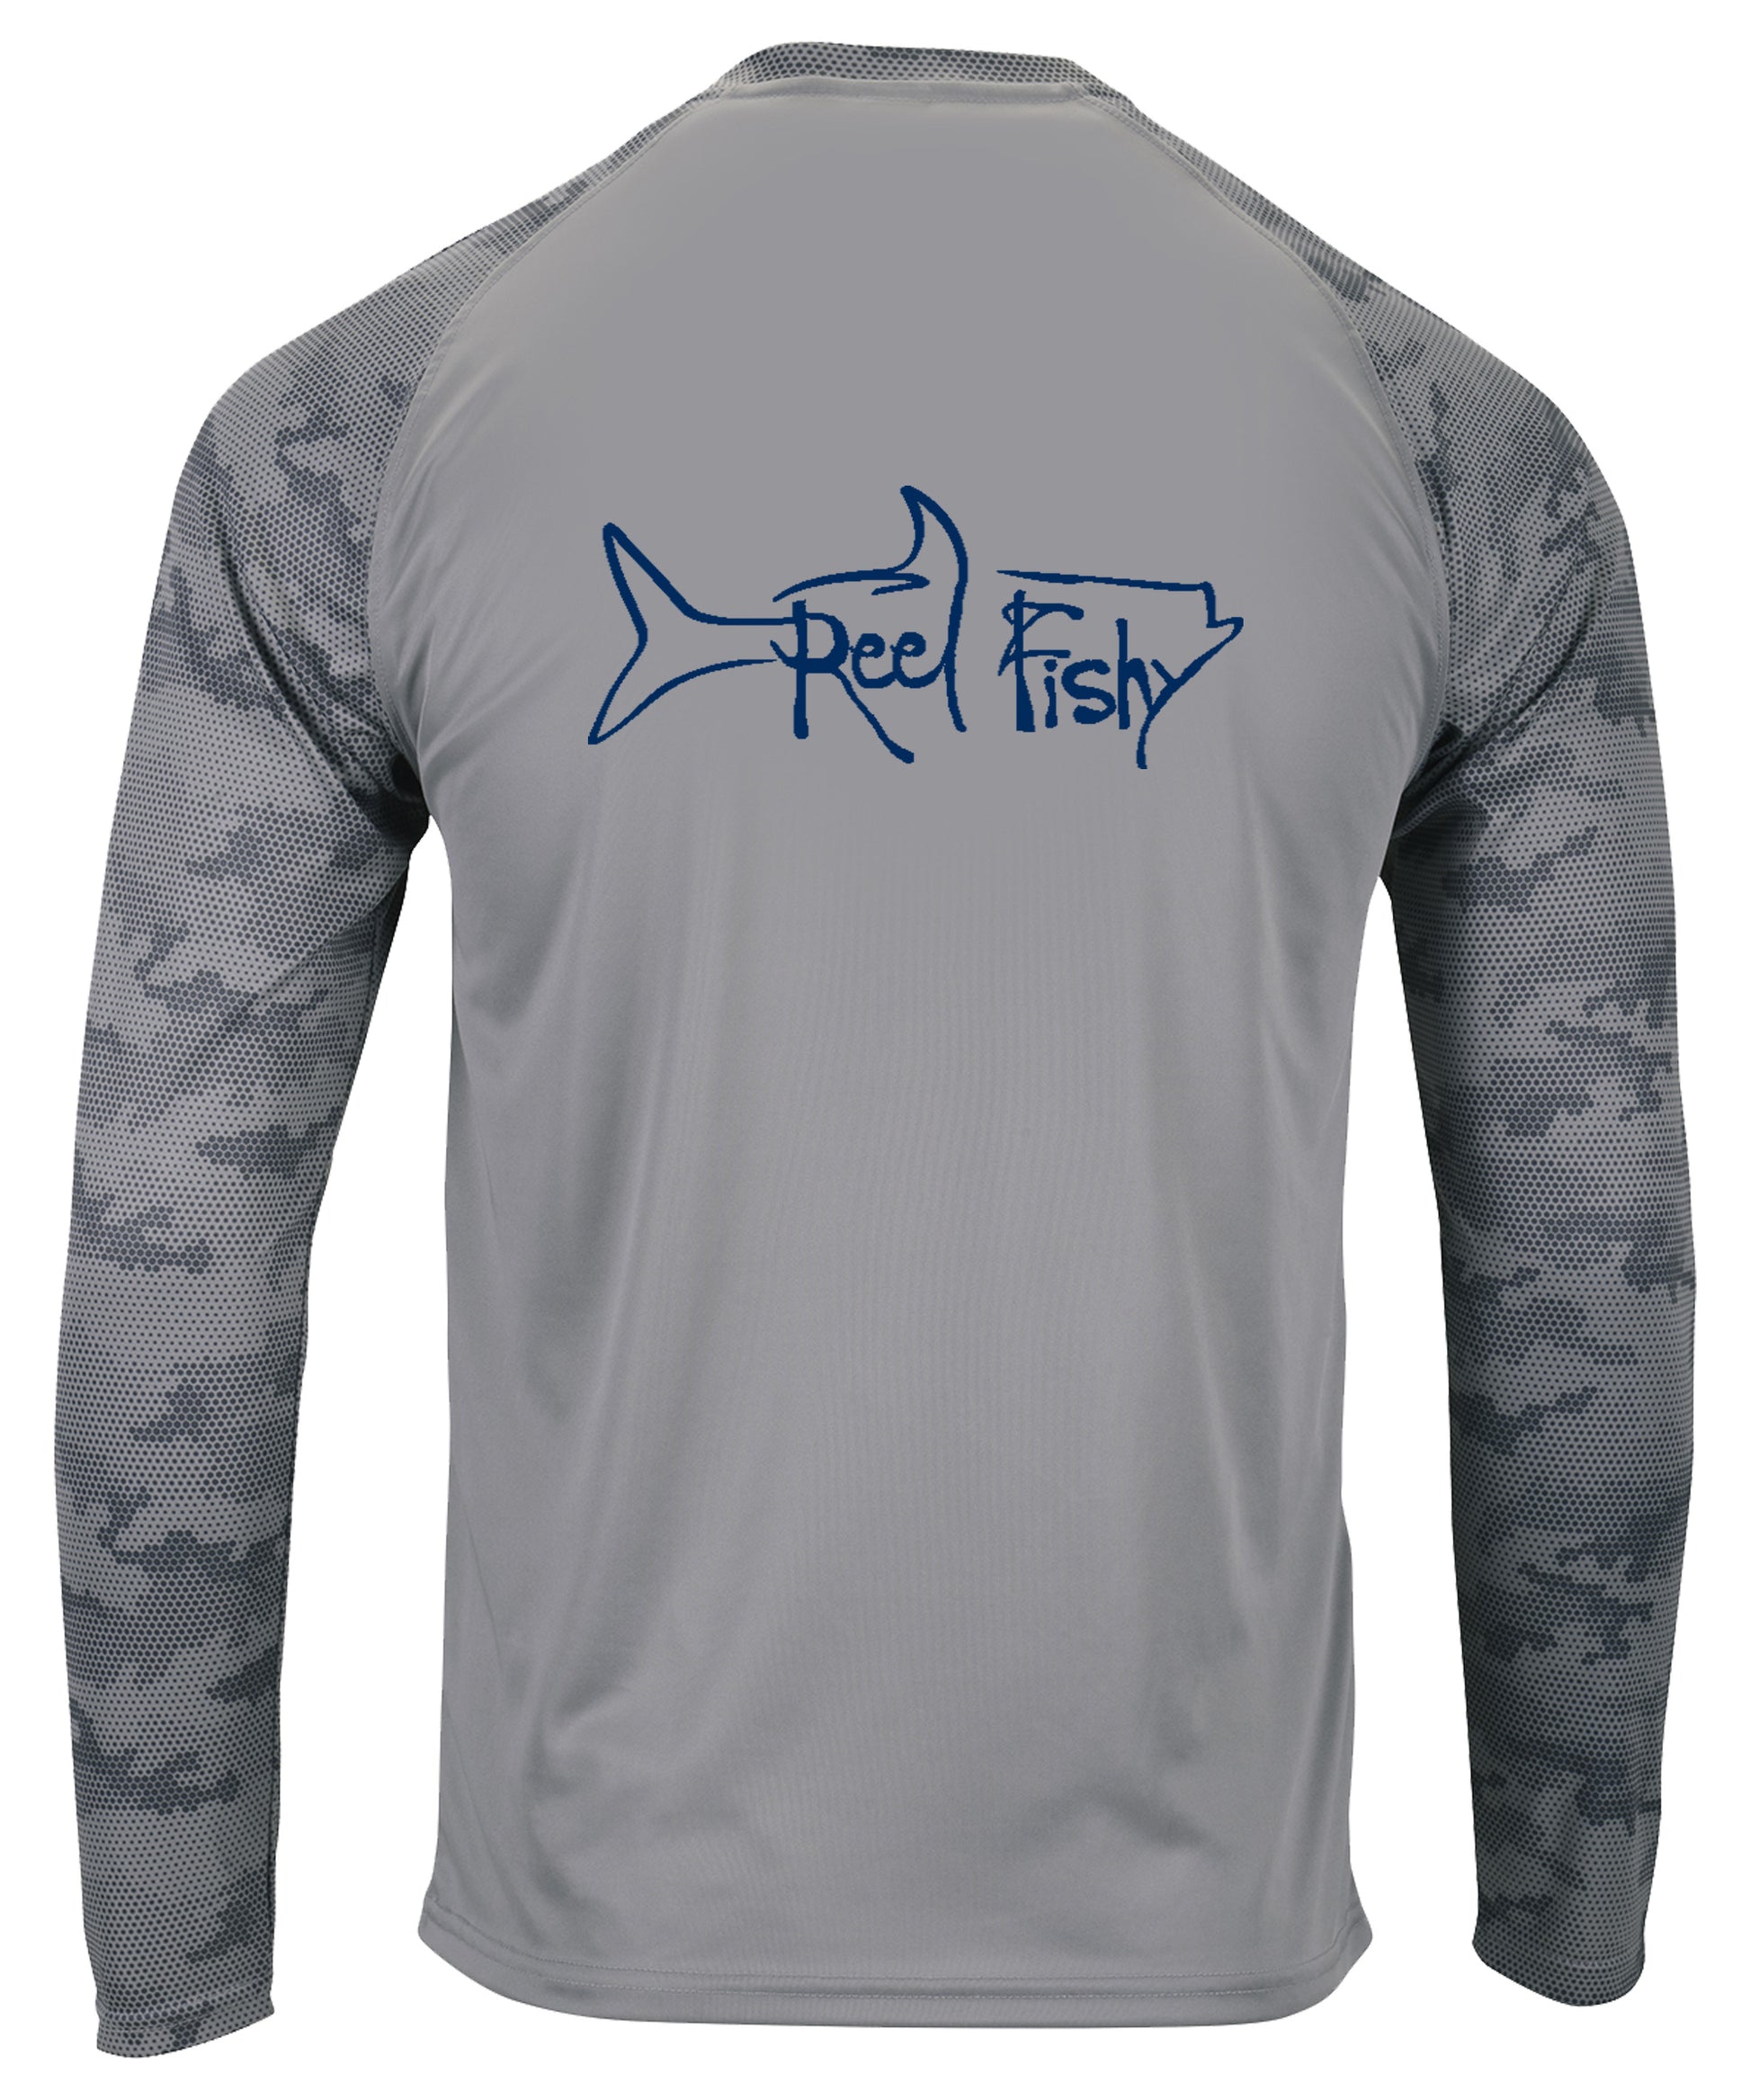 Tarpon Performance Digital Camo 50+uv Fishing Long Sleeve Shirts- Reel Fishy Apparel M / Med Gray Camo - unisex